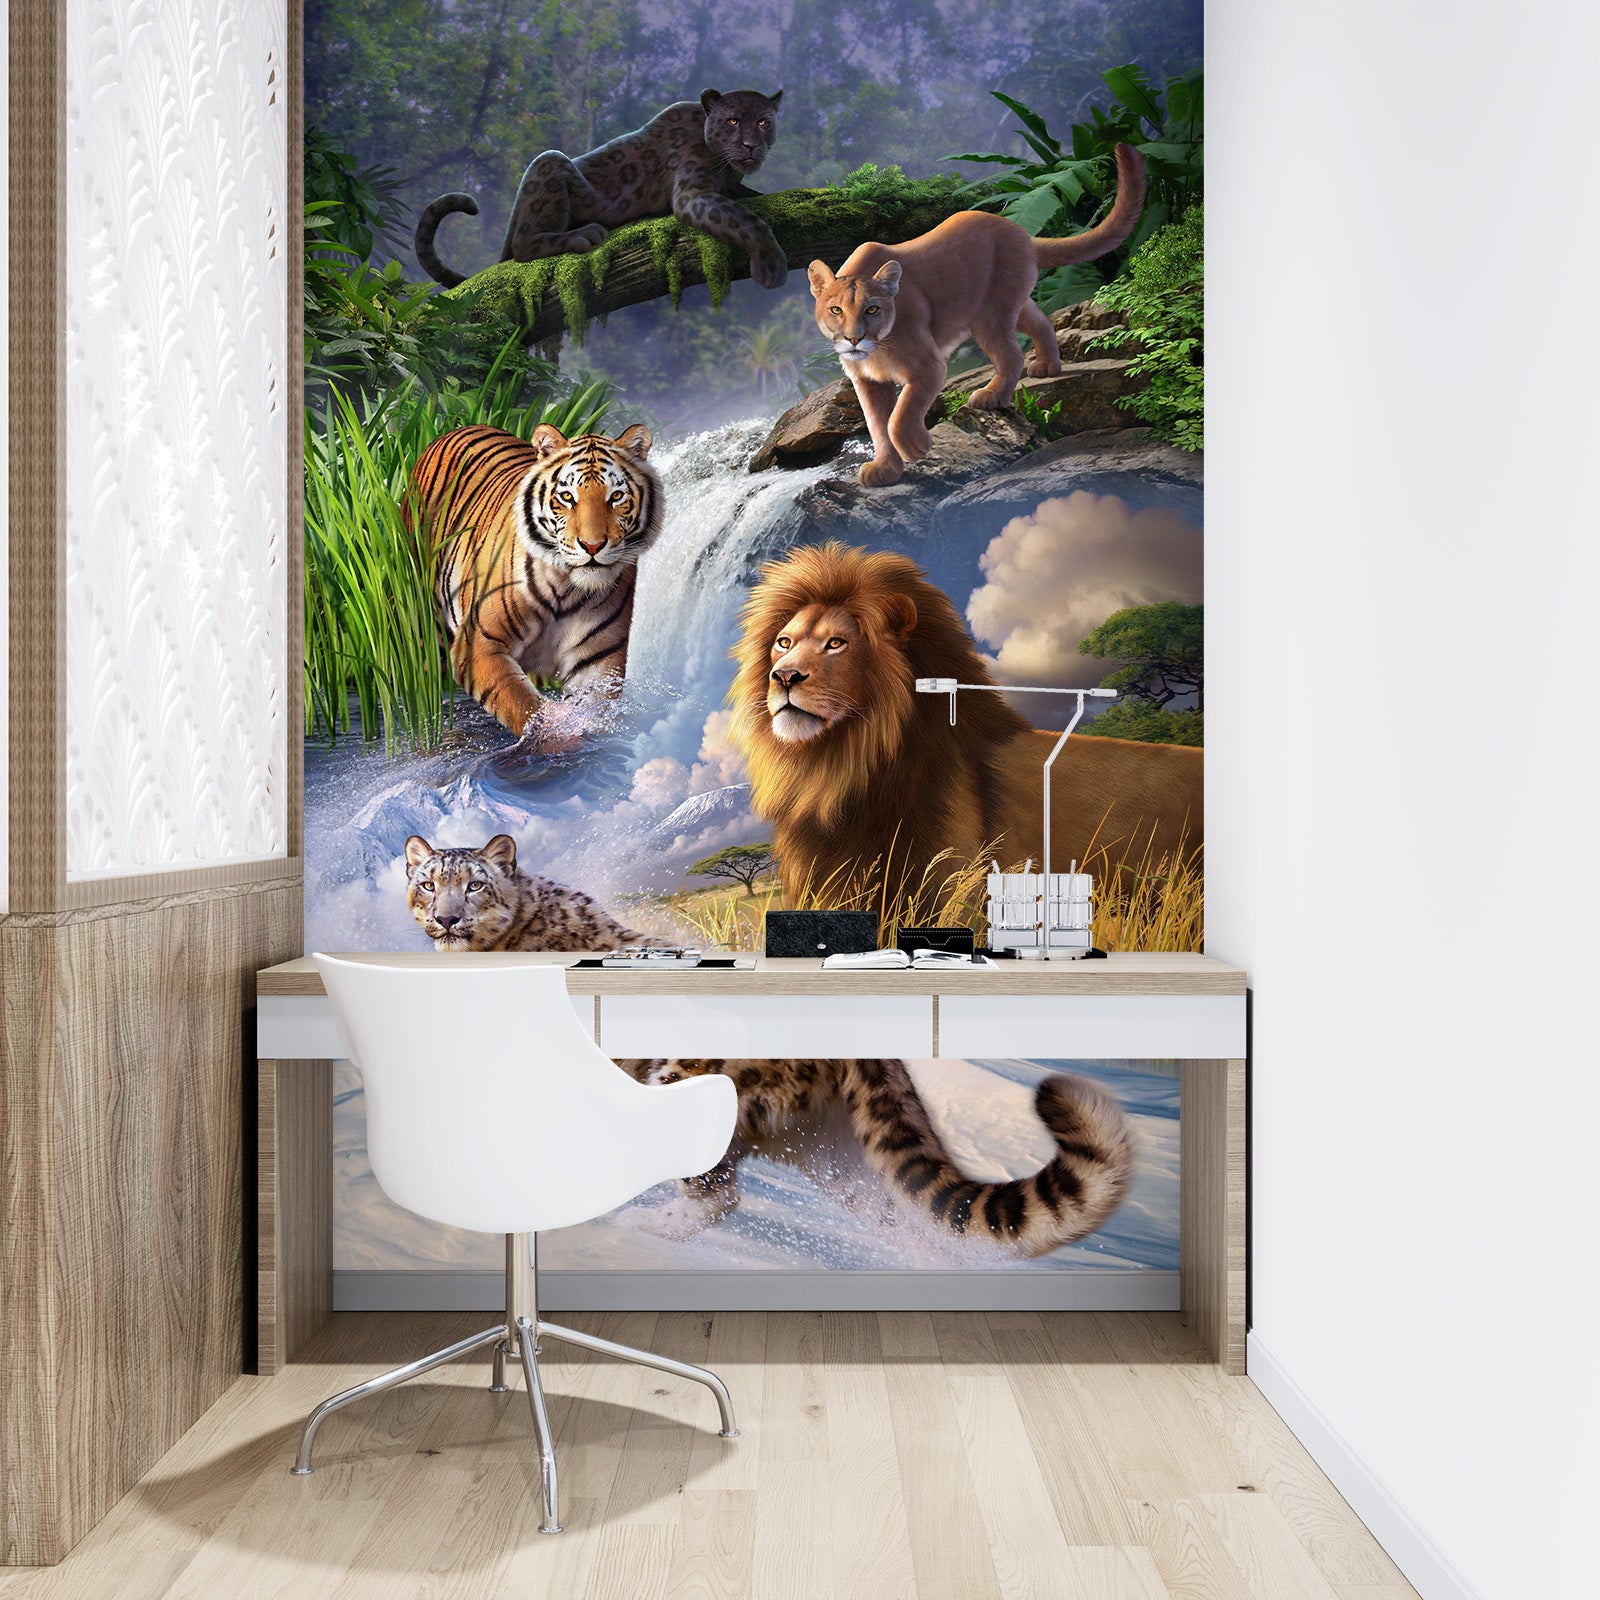 3D Tiger Lion 85037 Jerry LoFaro Wall Mural Wall Murals